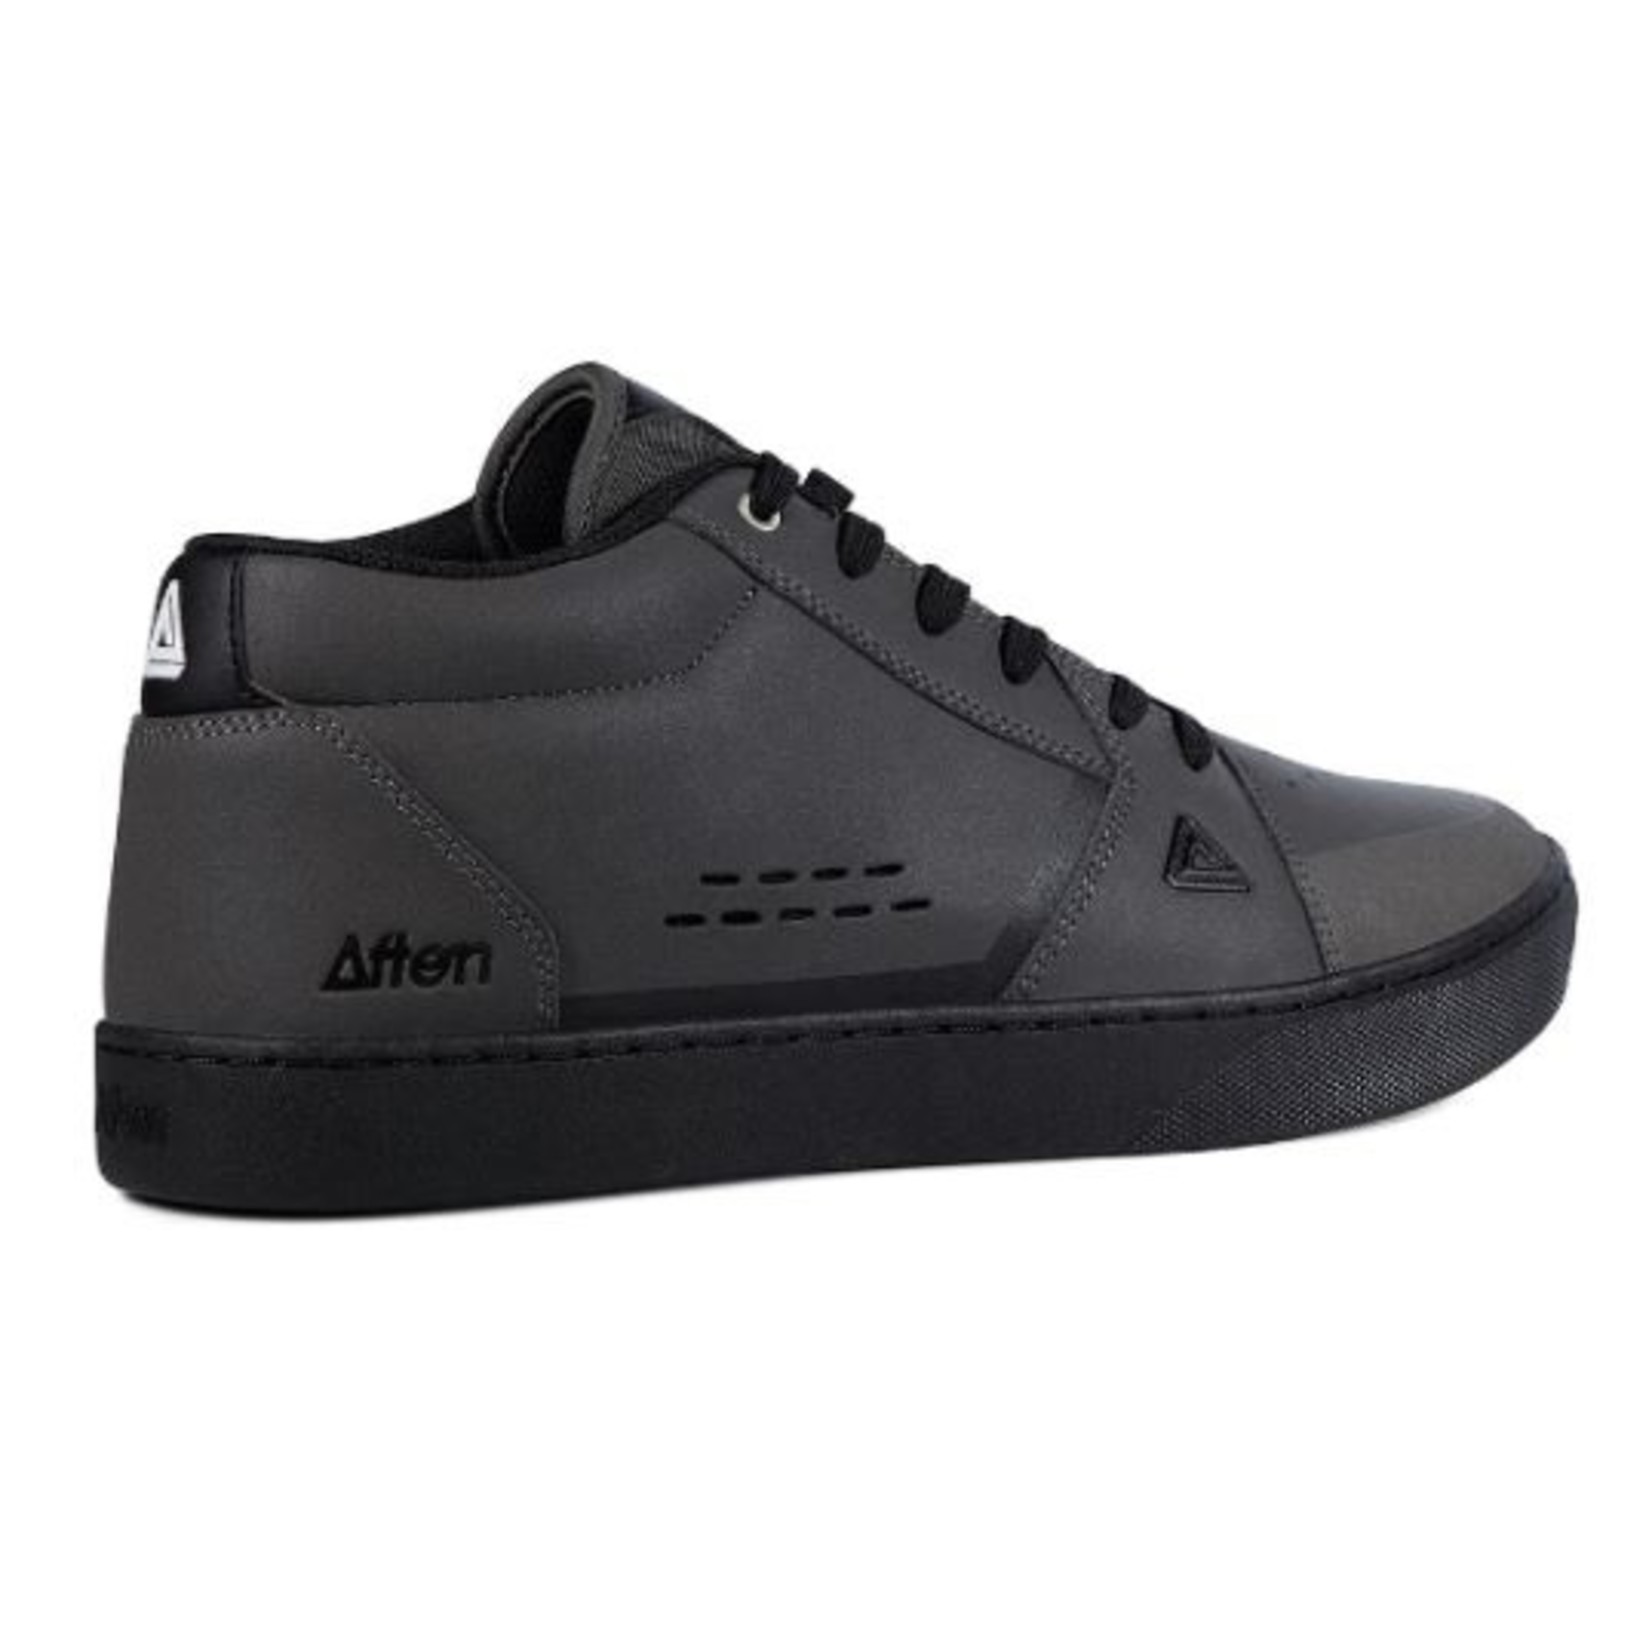 Afton Shoes Afton MTB Cycling Shoes Cooper Flat Sole Bike Shoes - Grey/Black